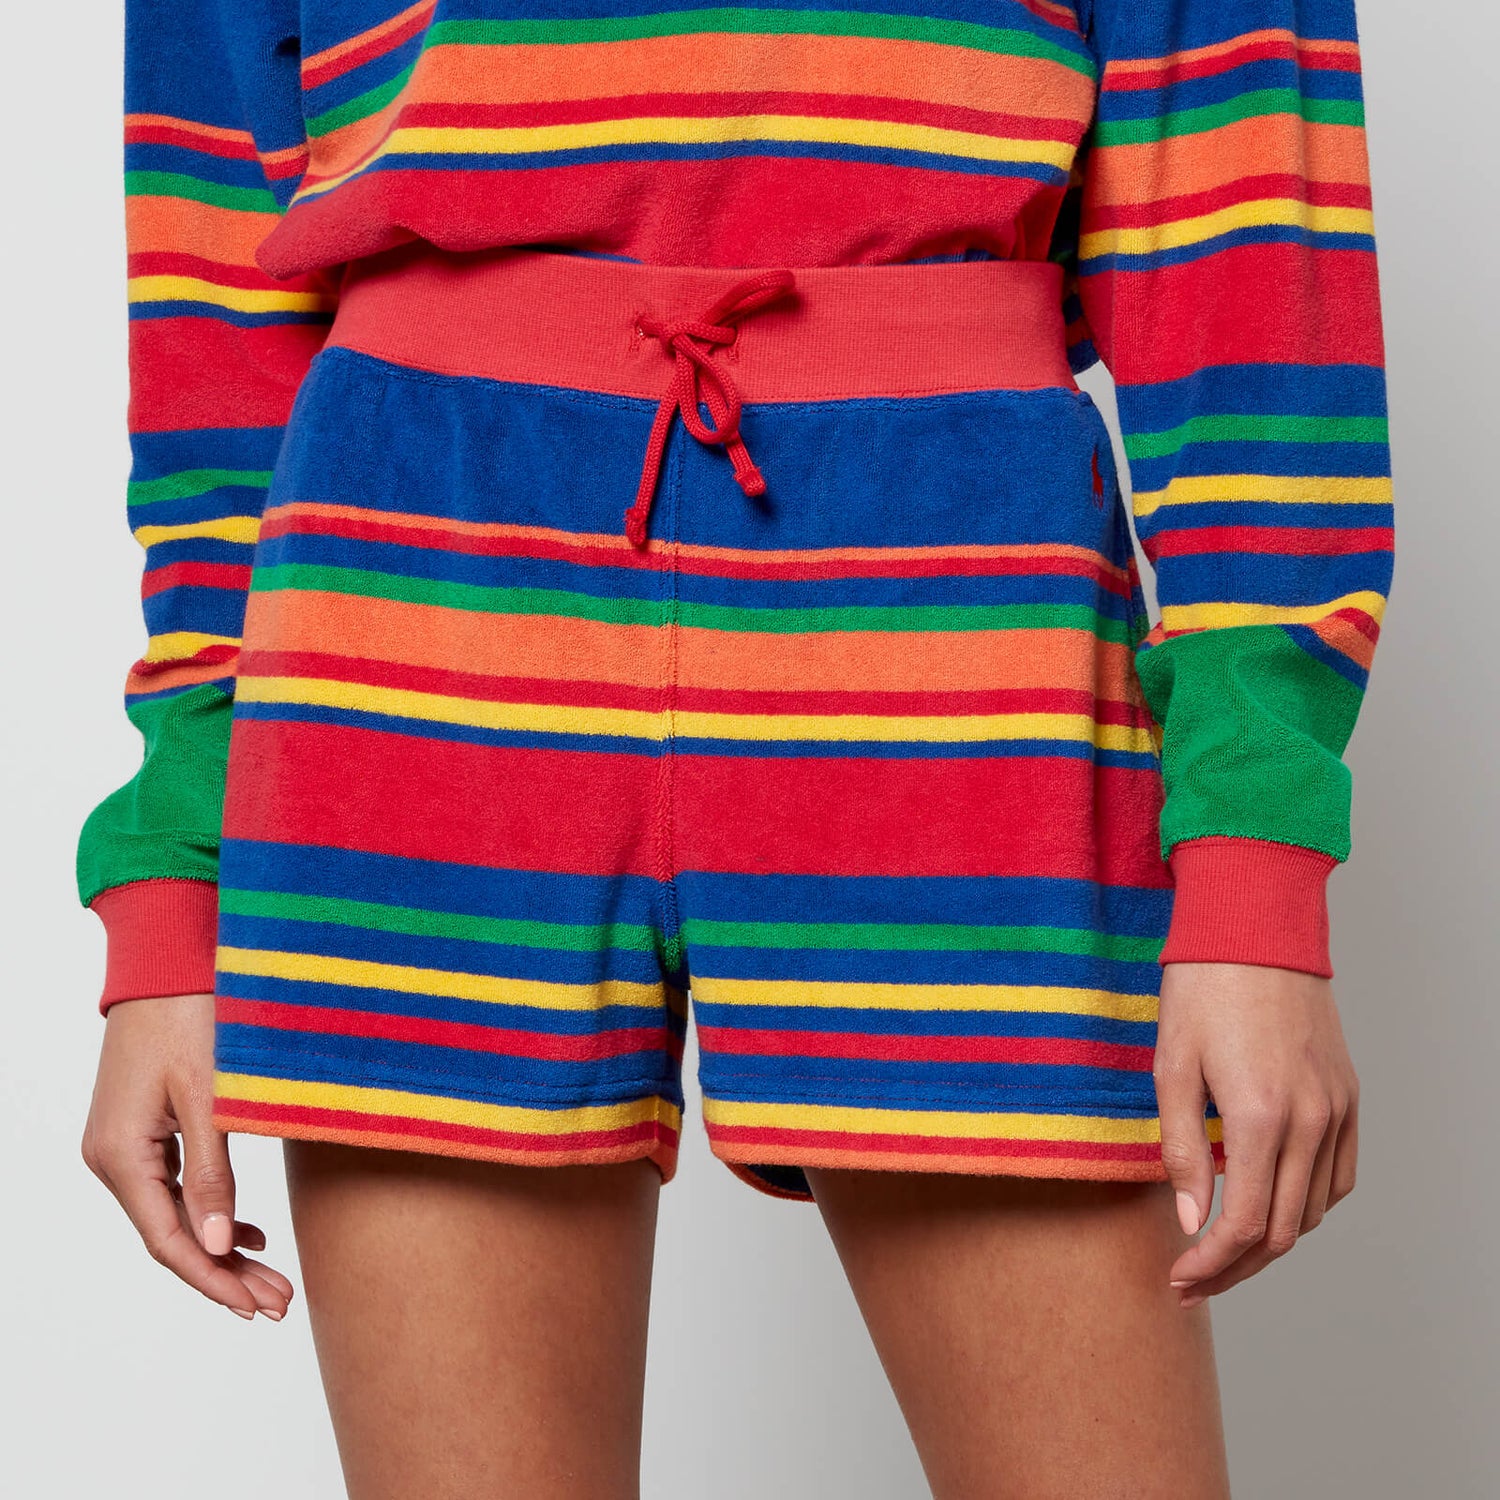 Polo Ralph Lauren Women's Stripe Shorts - Multi